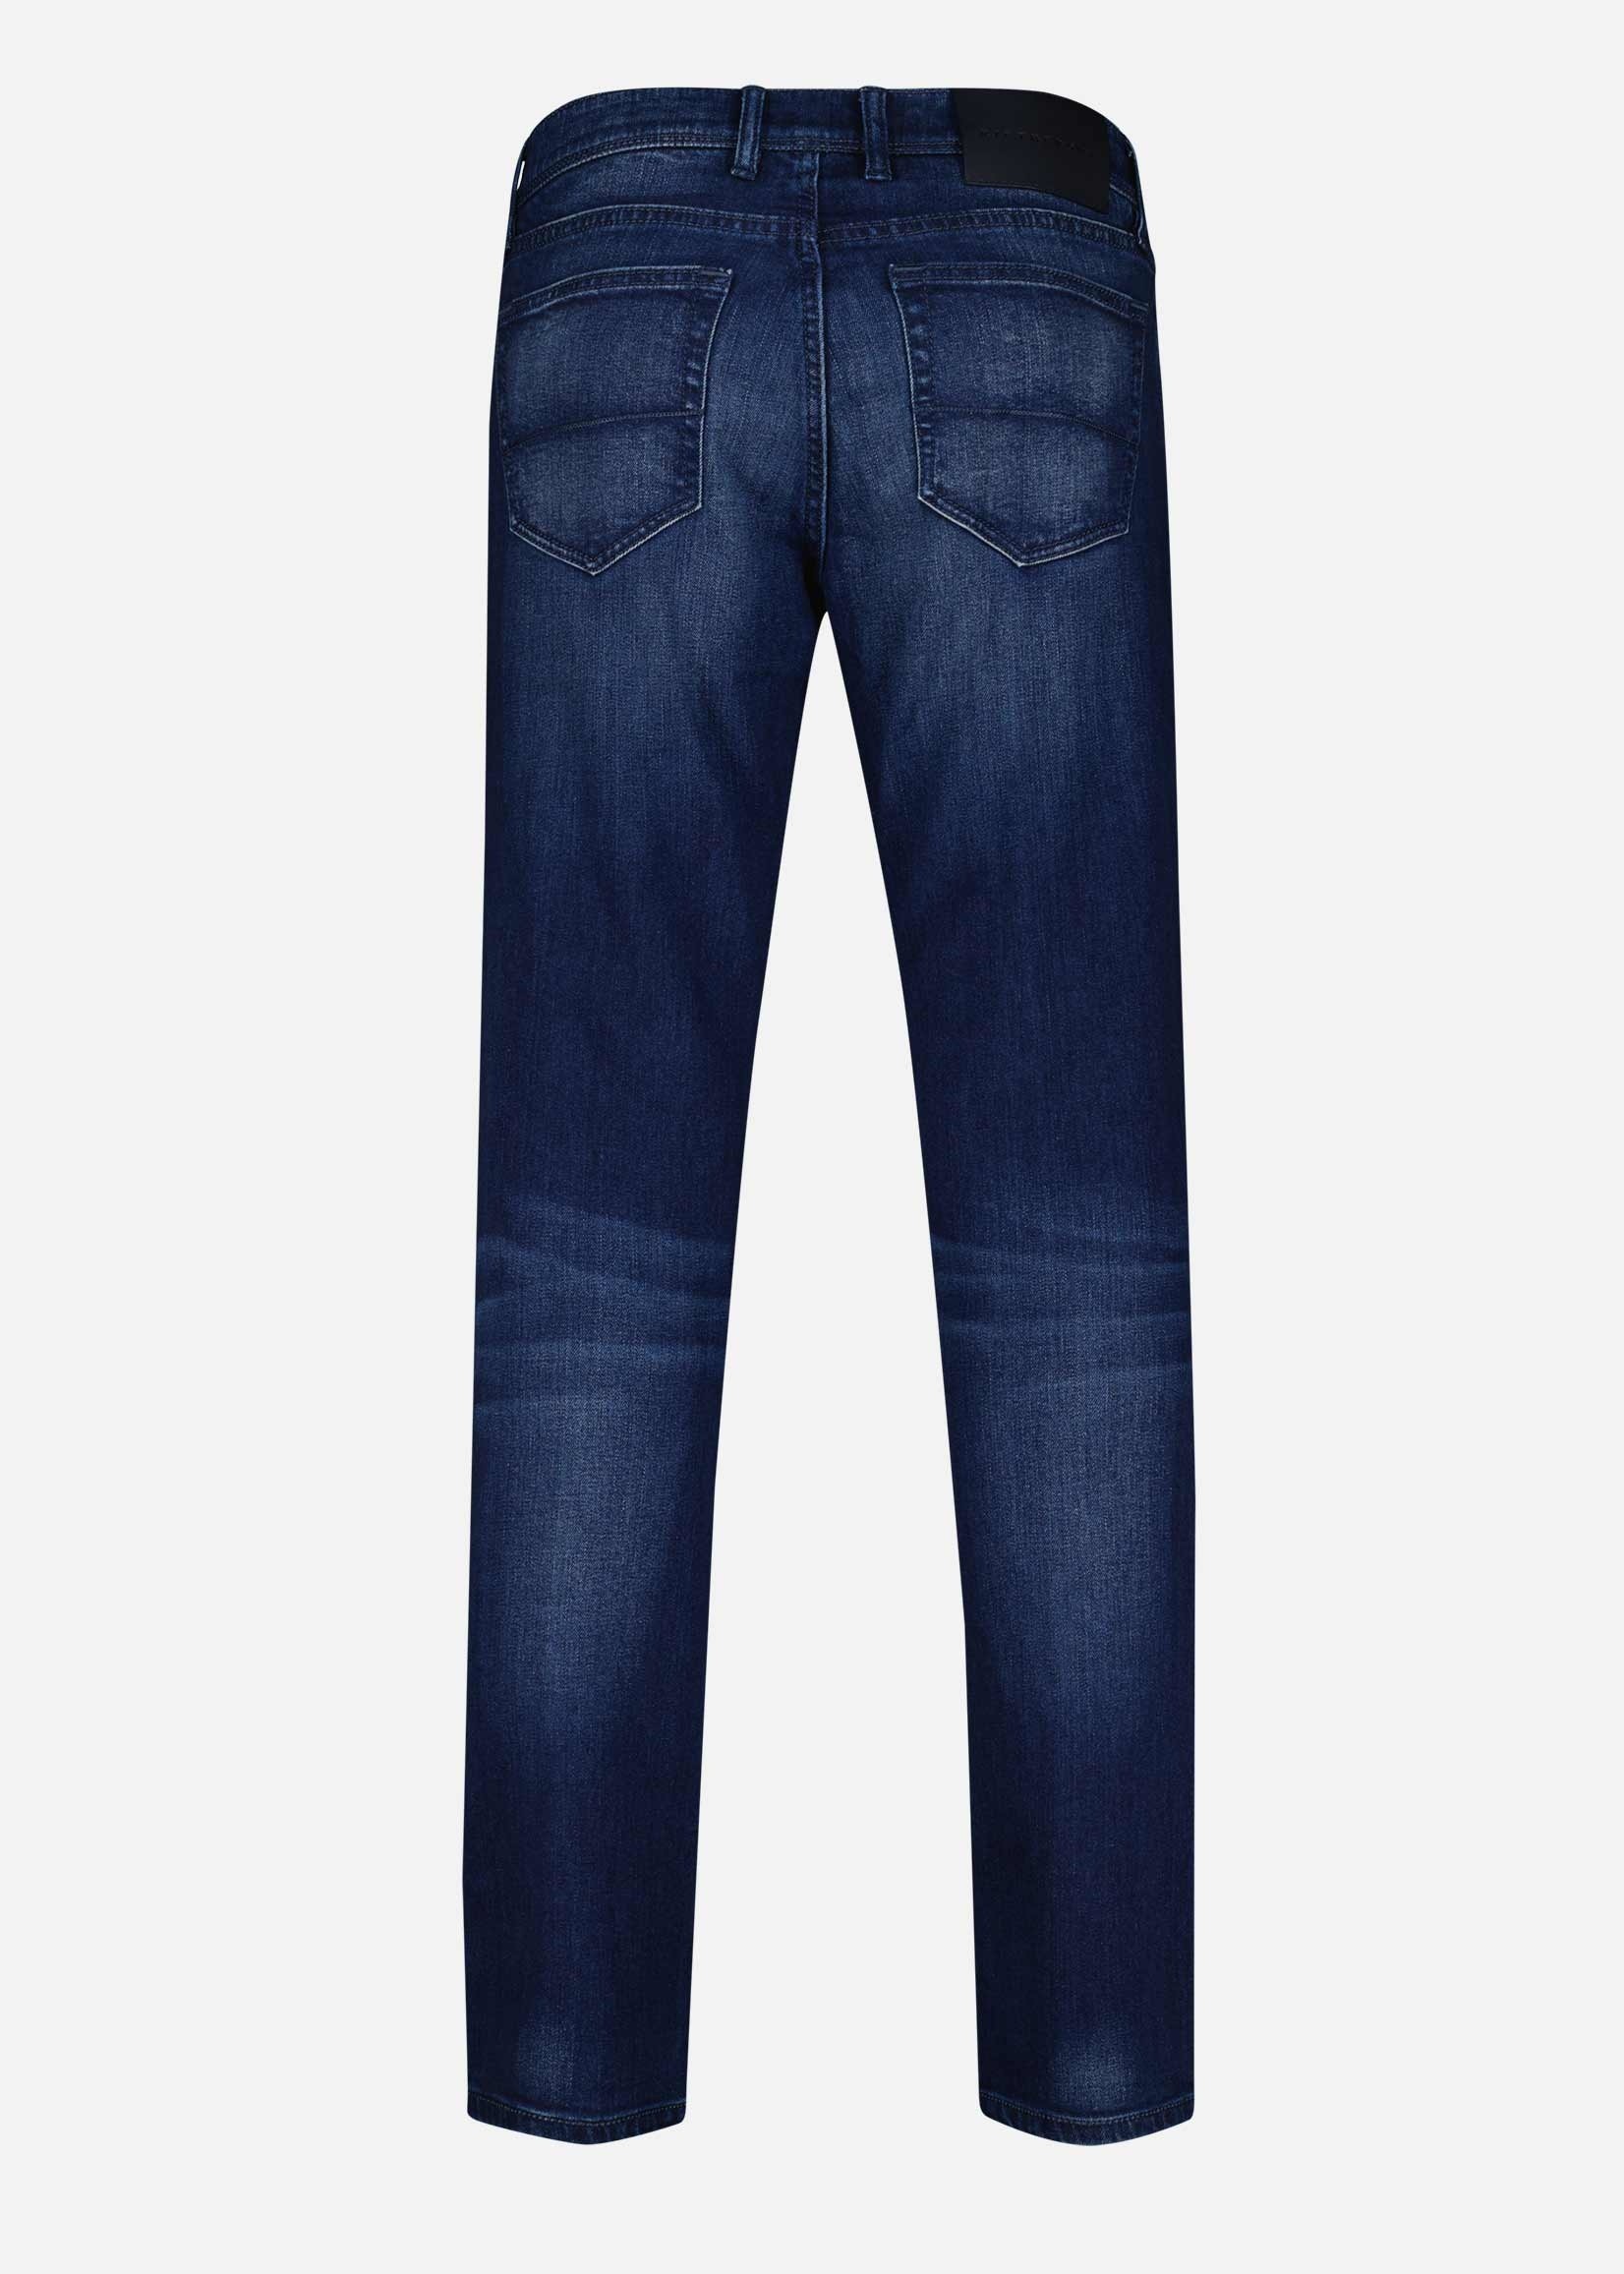 Rietbergh Jeans |  Dark Blue